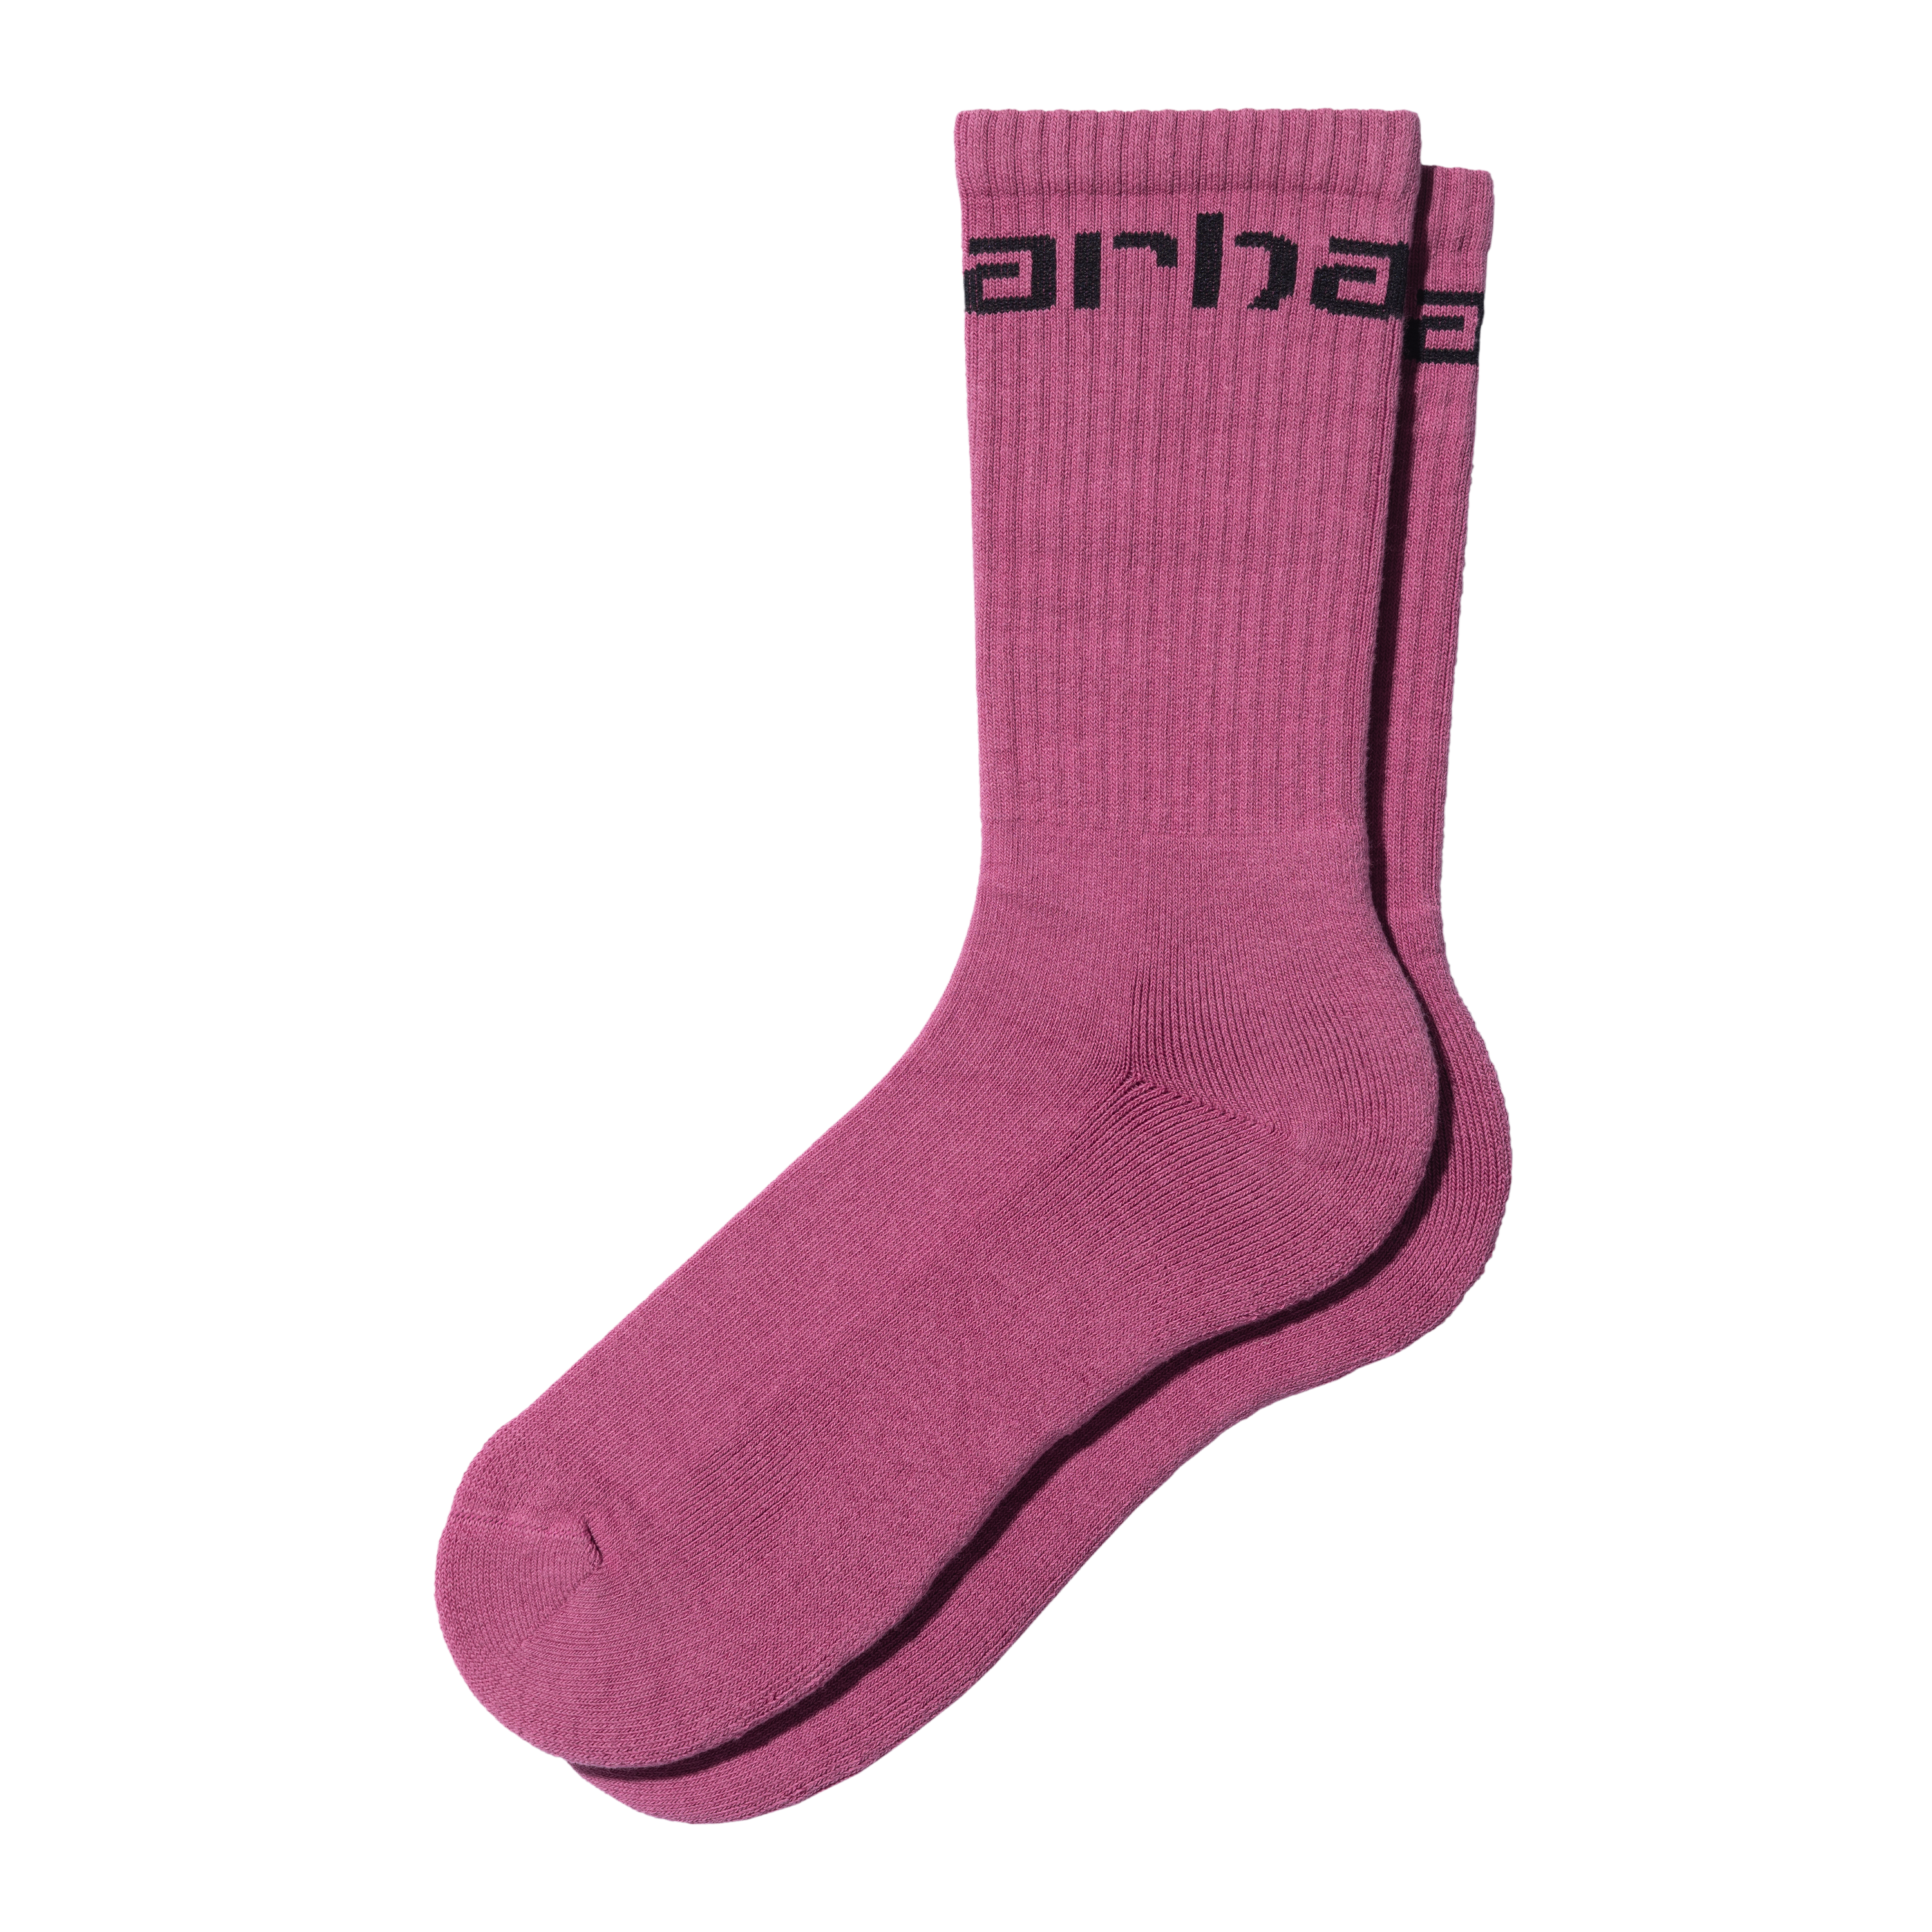 Carhartt WIP Carhartt Socks in Pink